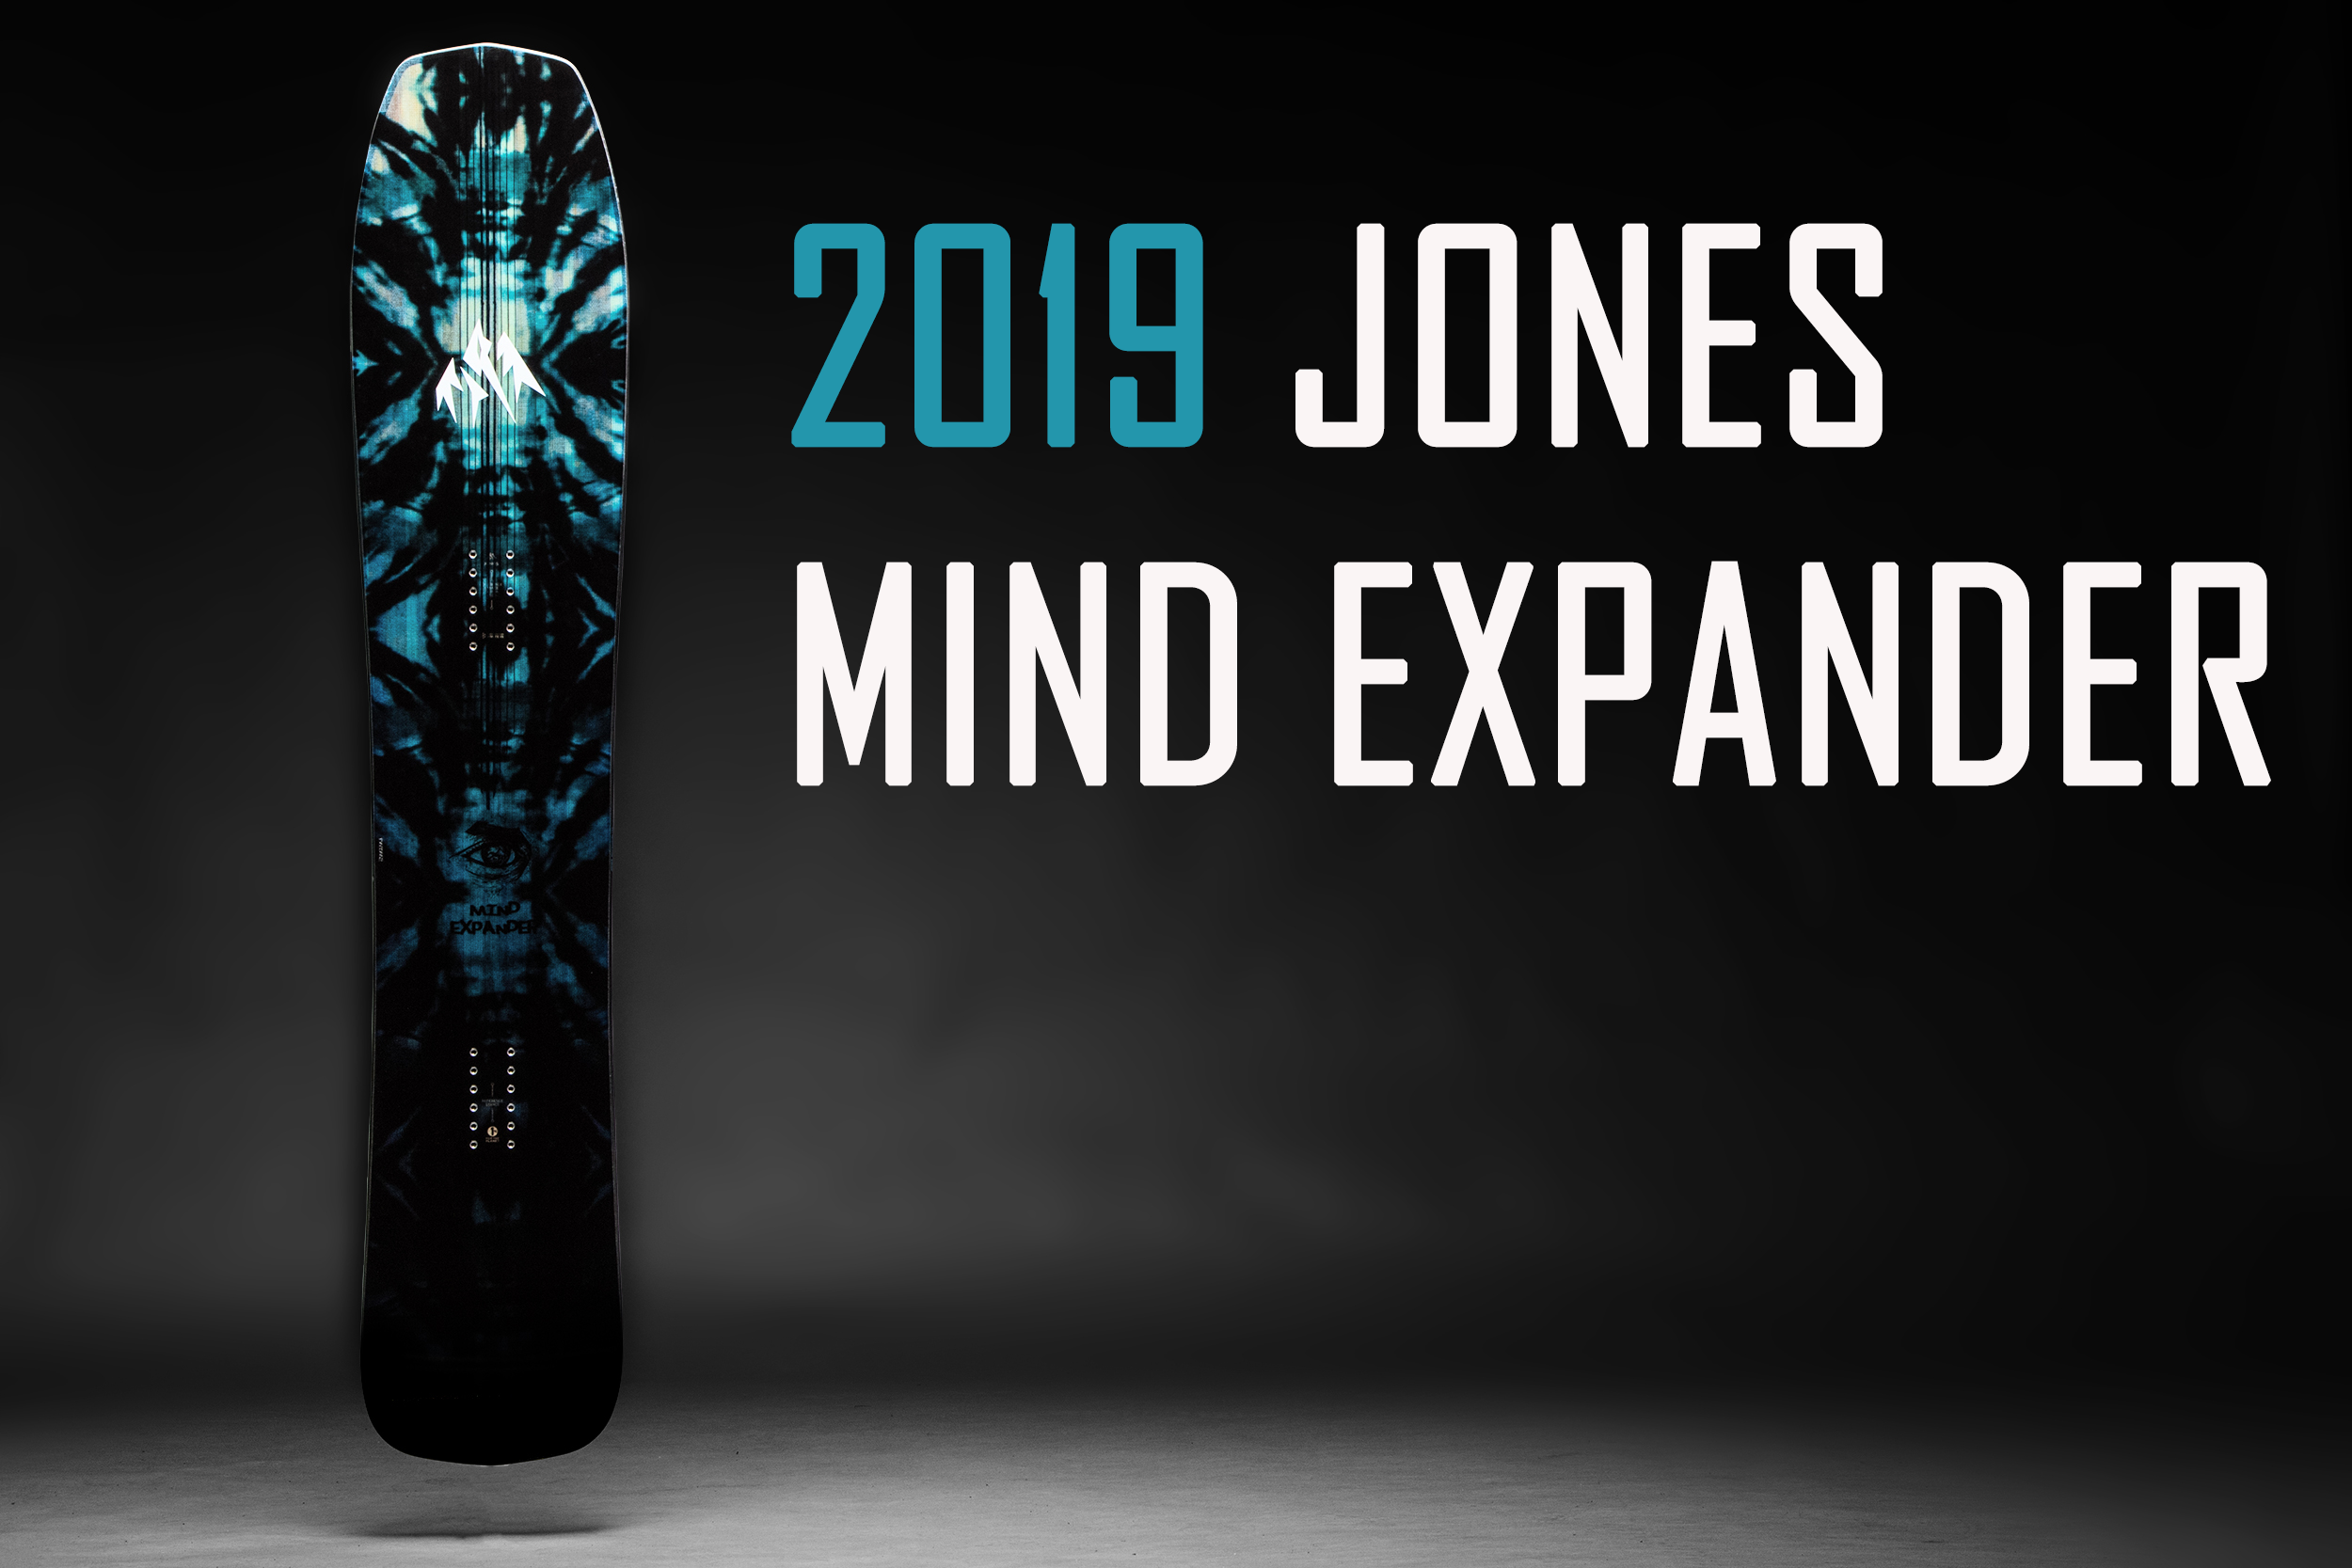 Jones Mind Expander Size Chart